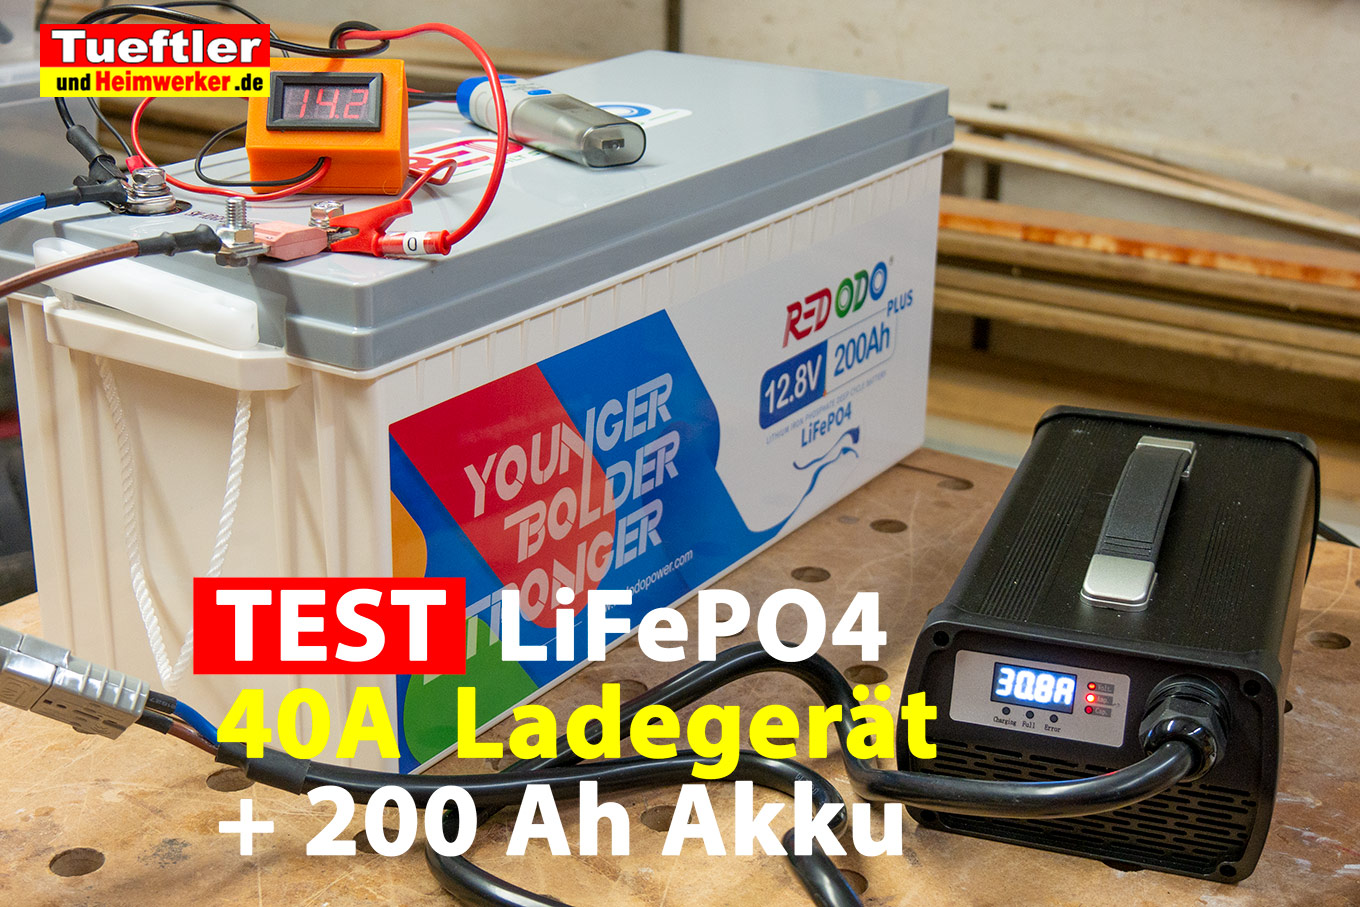 Redodo Akku und Ladegerät Test- LiFePO4 Belastung u. BMS-Test